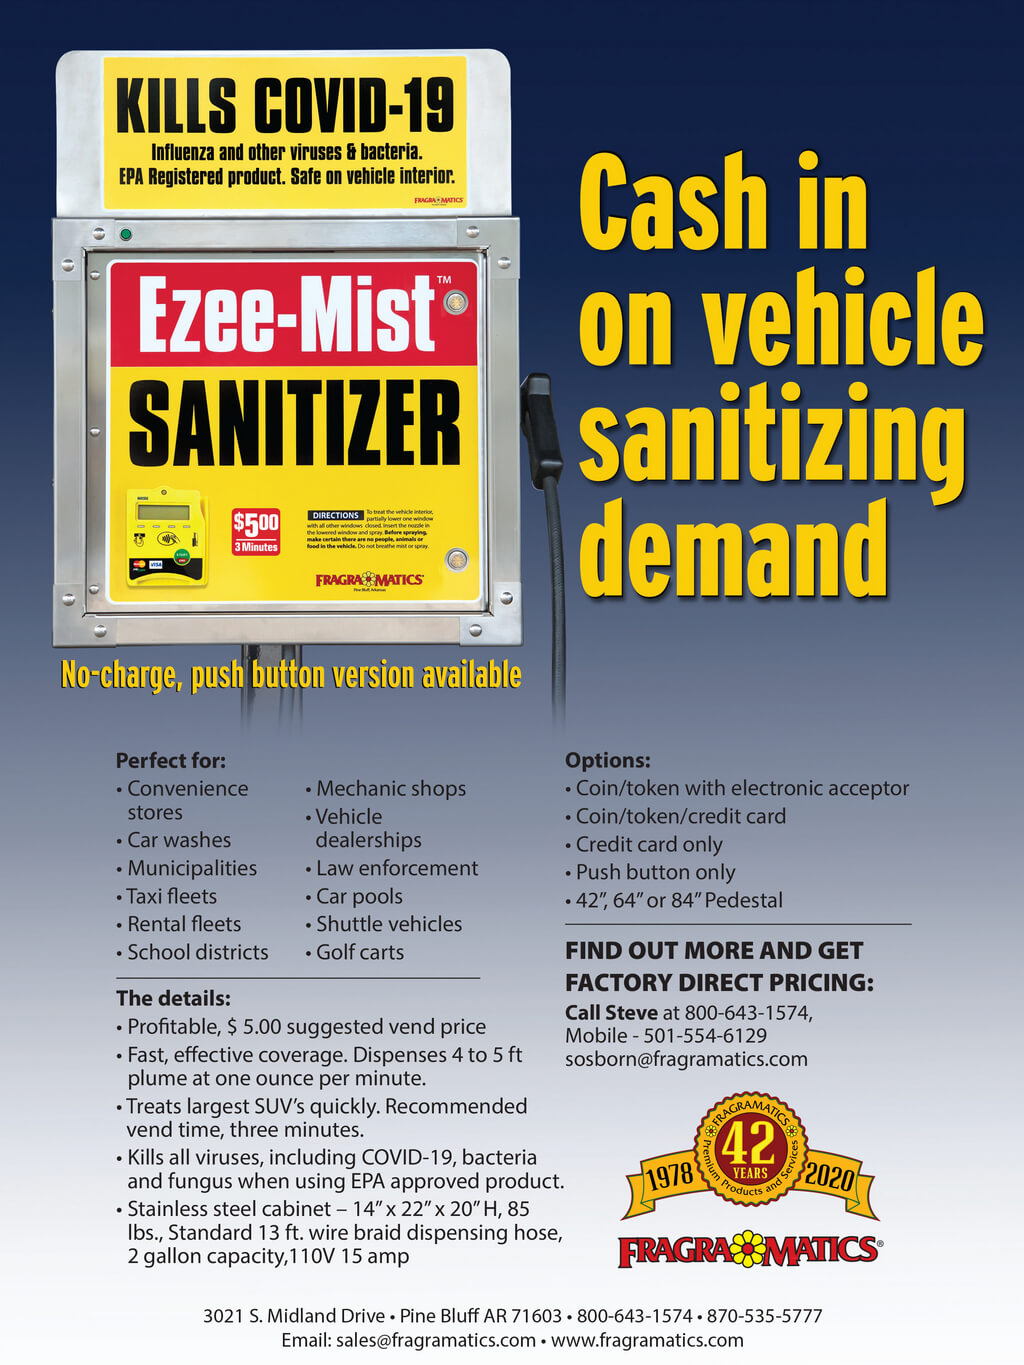 Fragramatics Ezee-Mist Cash in on vehicle sanitizing demand